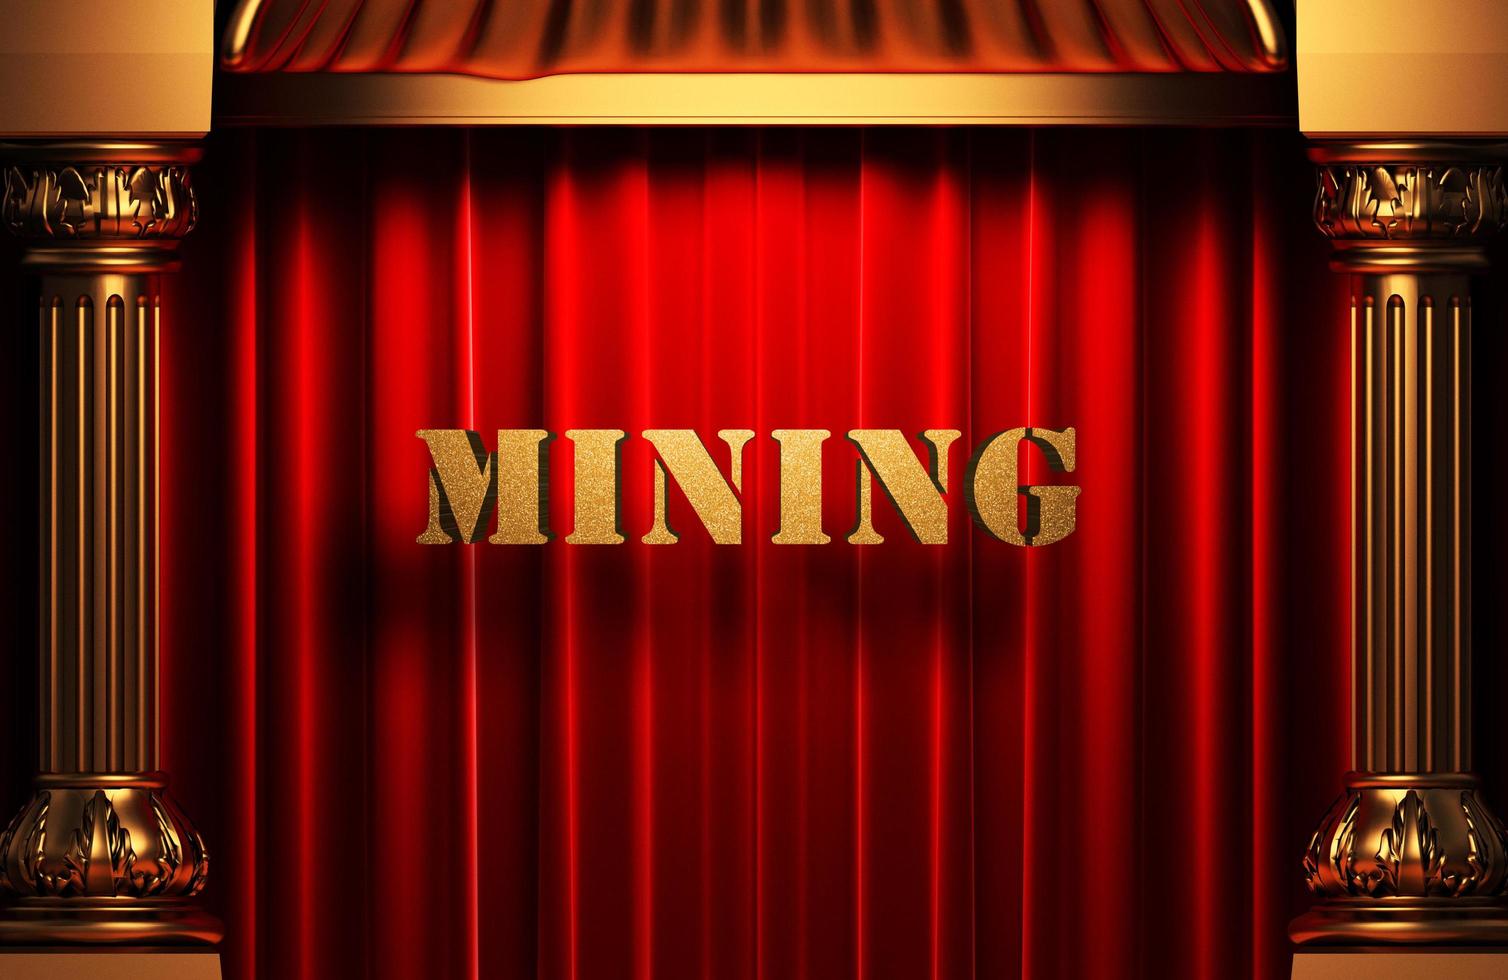 palabra dorada minera en cortina roja foto